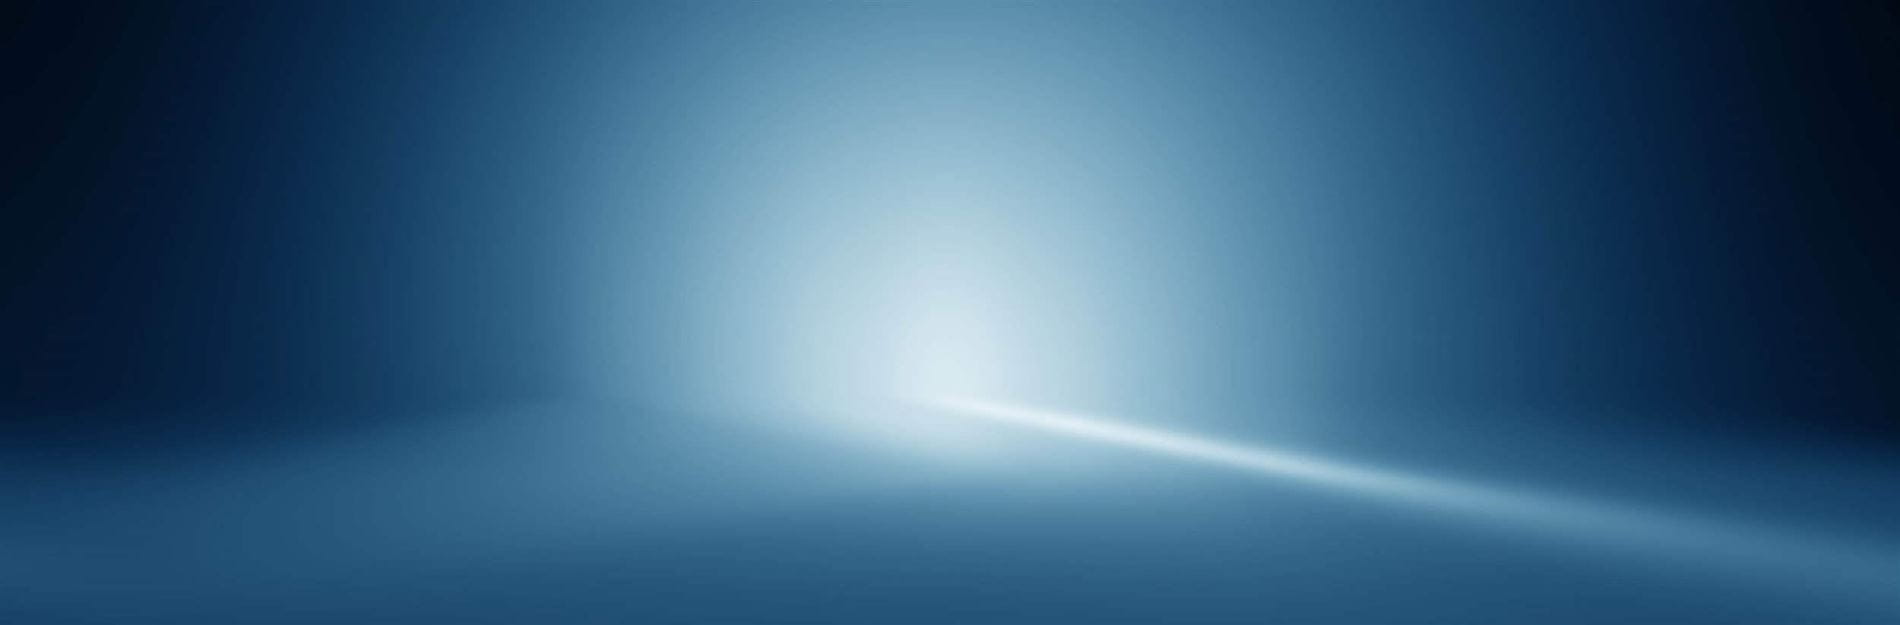 blue-empty-room-studio-gradient-with-spotlight